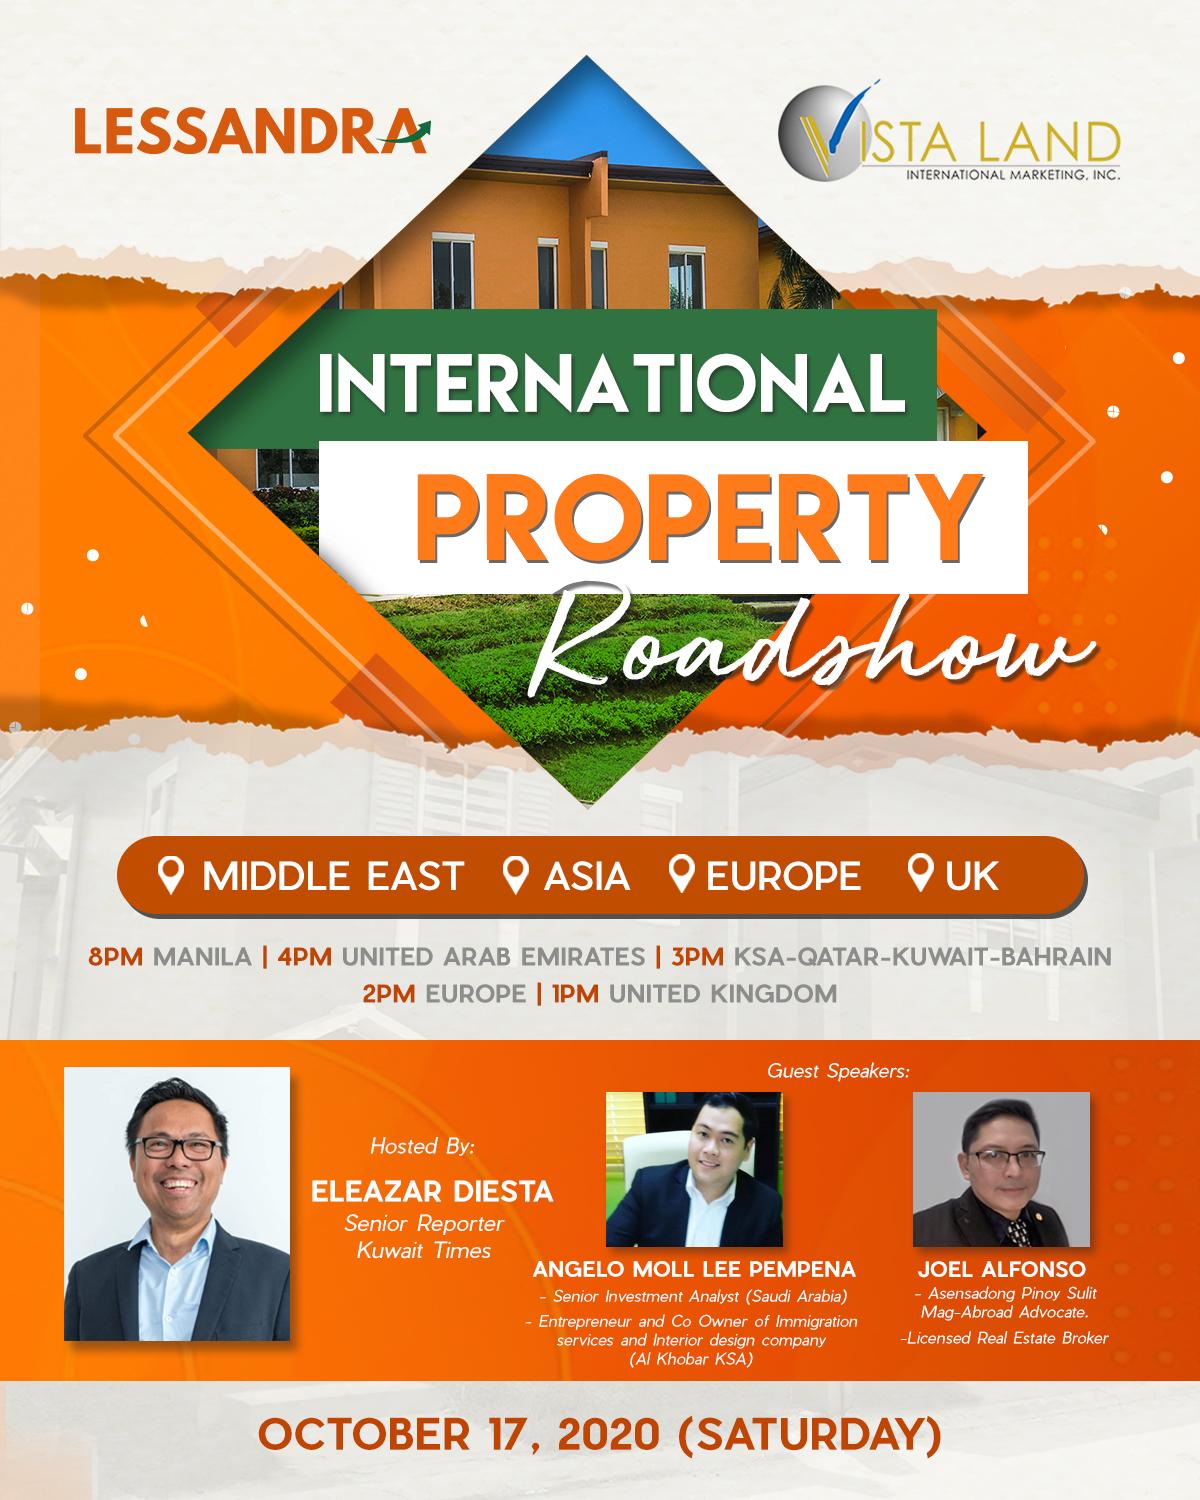 International Property Road show event